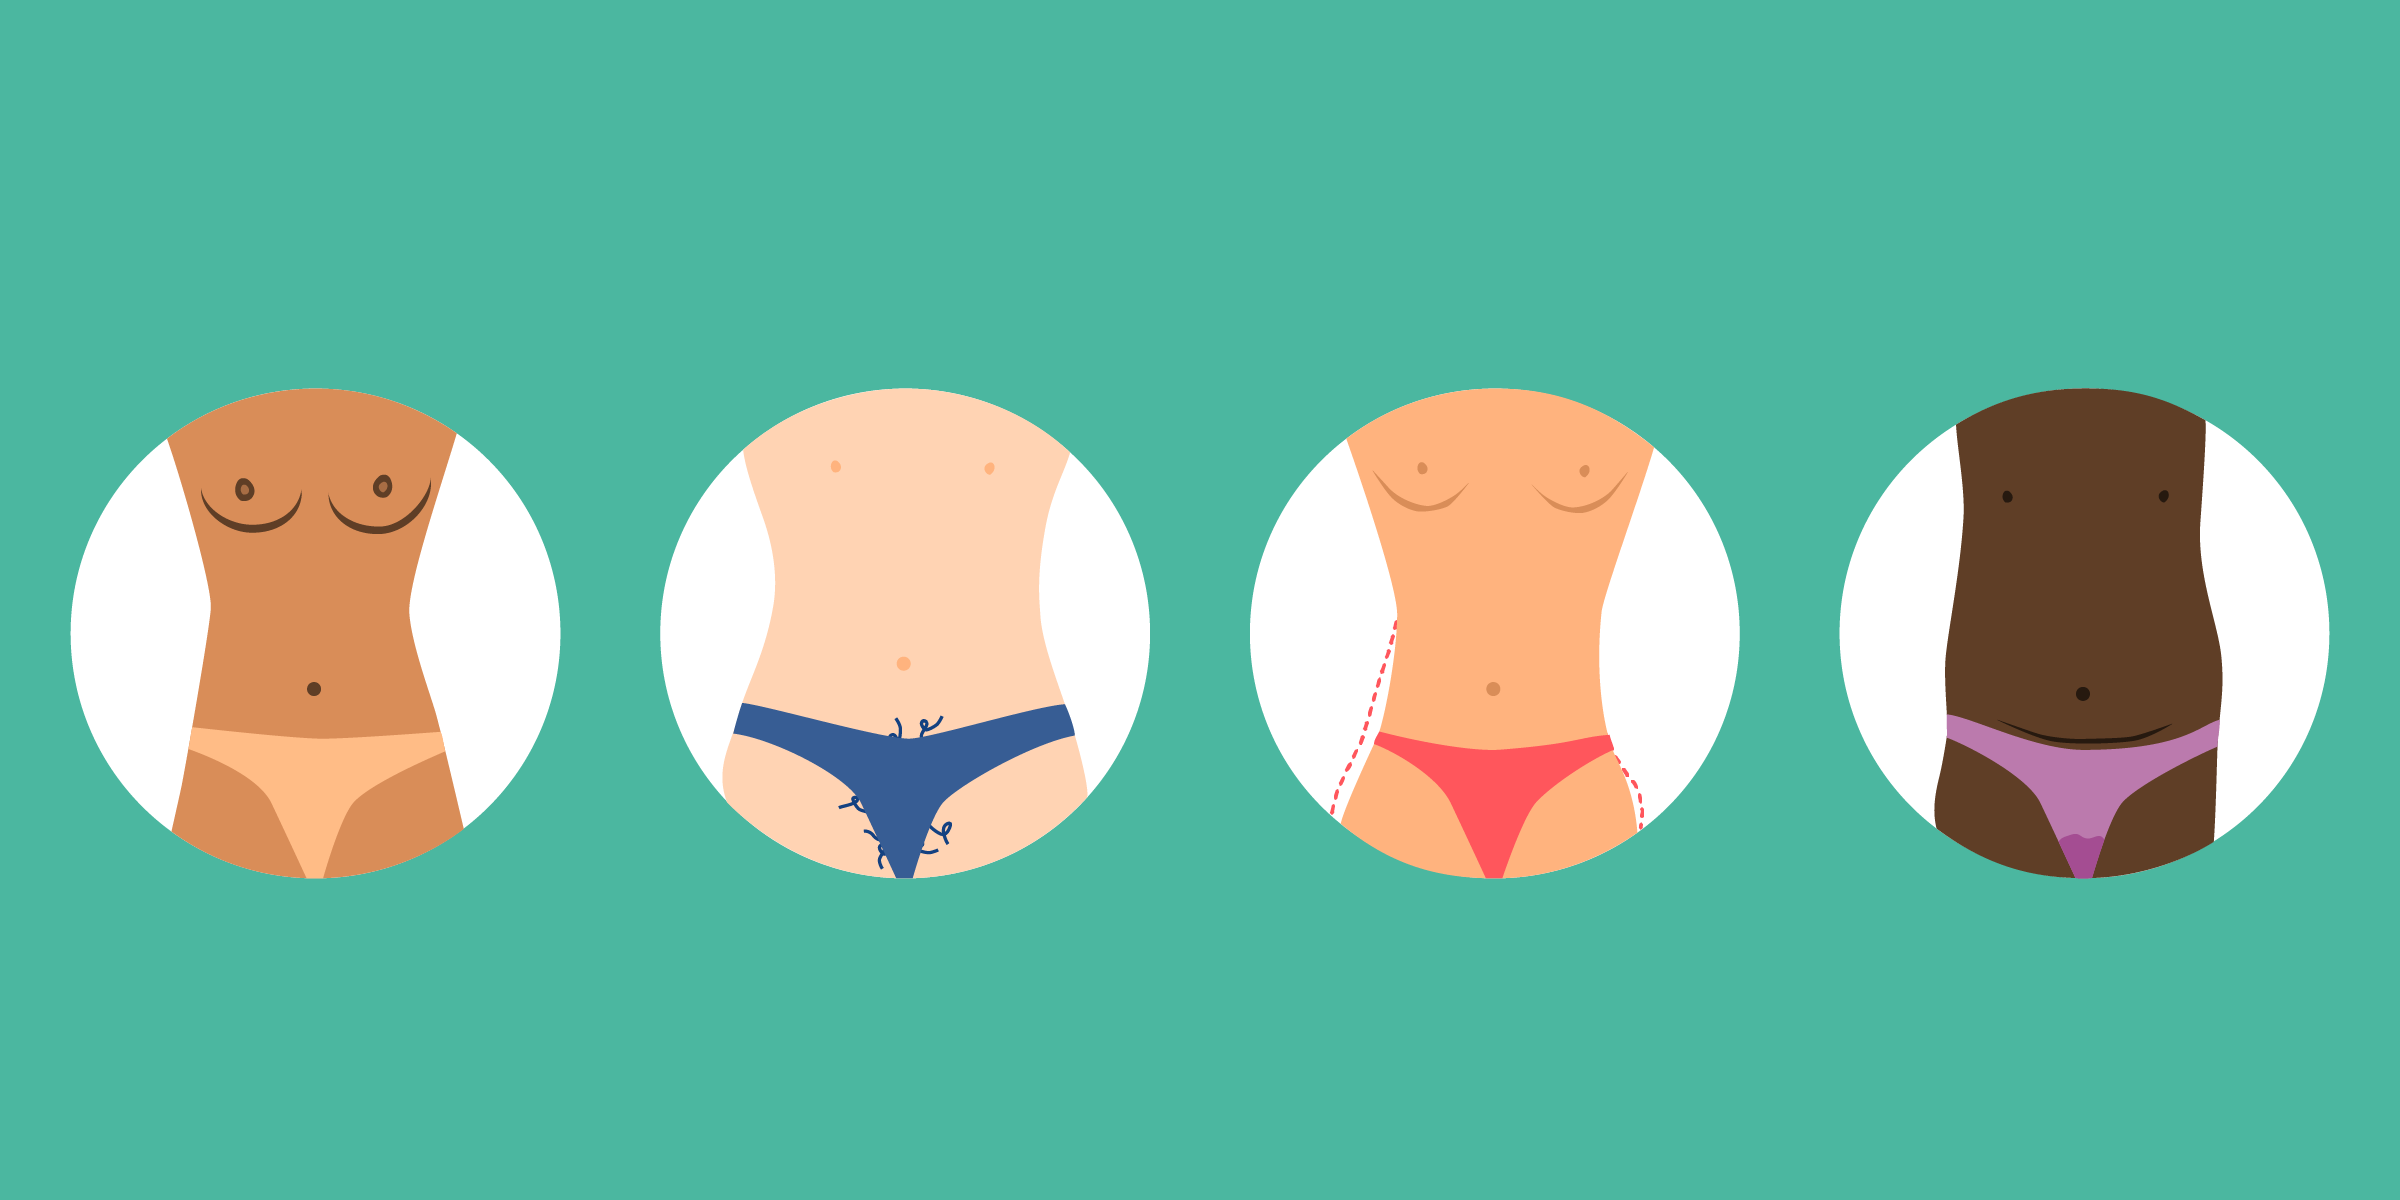 four illustrations of torsos